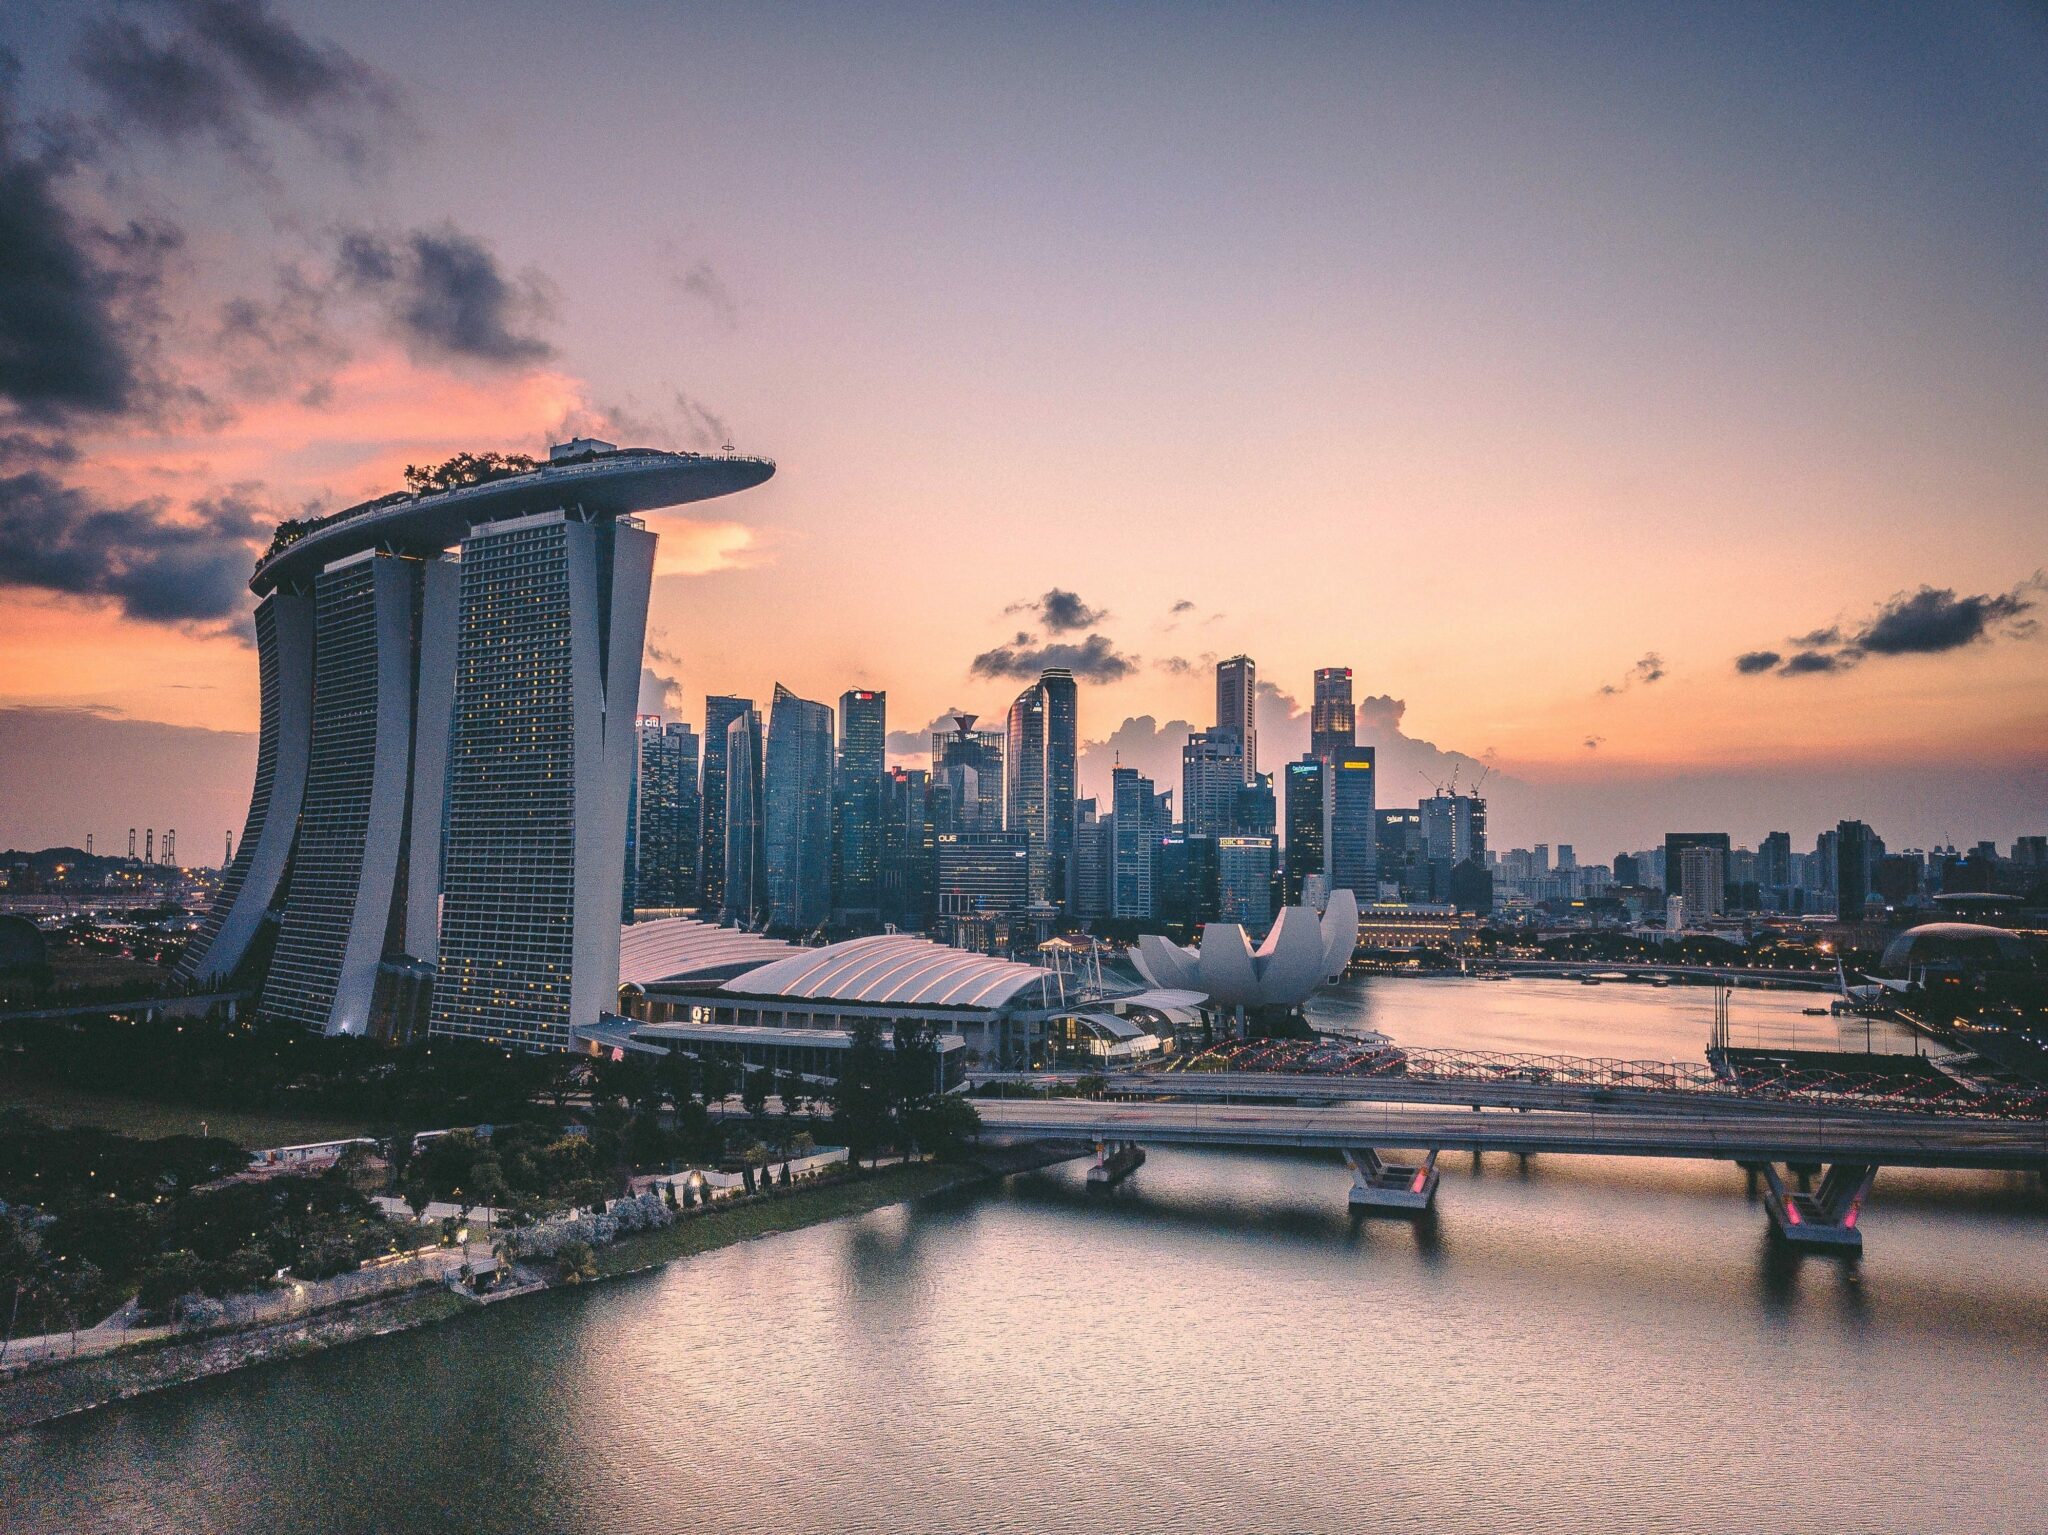 Singapore skyline during sunset